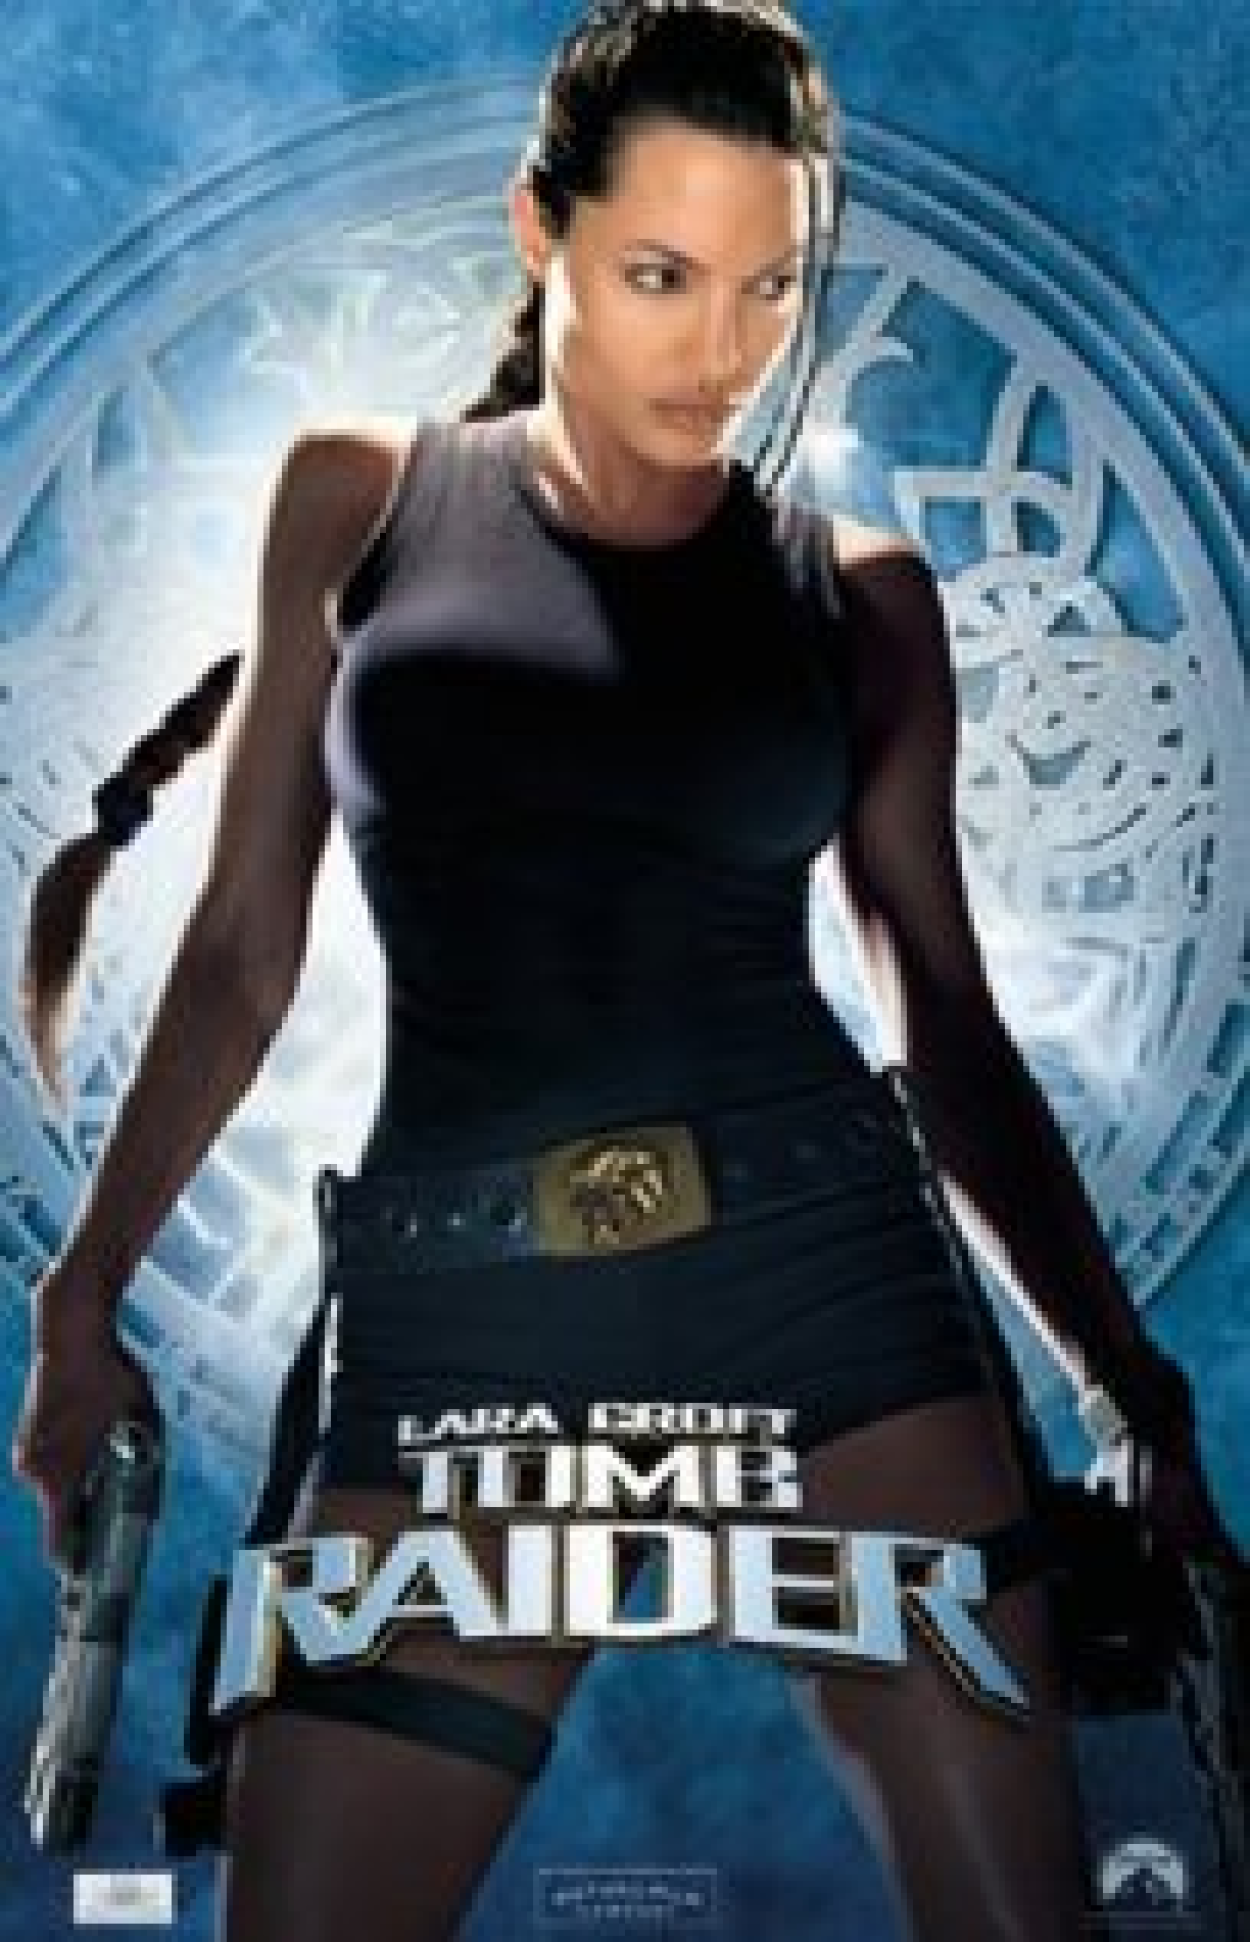 Arquivos Tomb Raider • Angelina Jolie Brasil